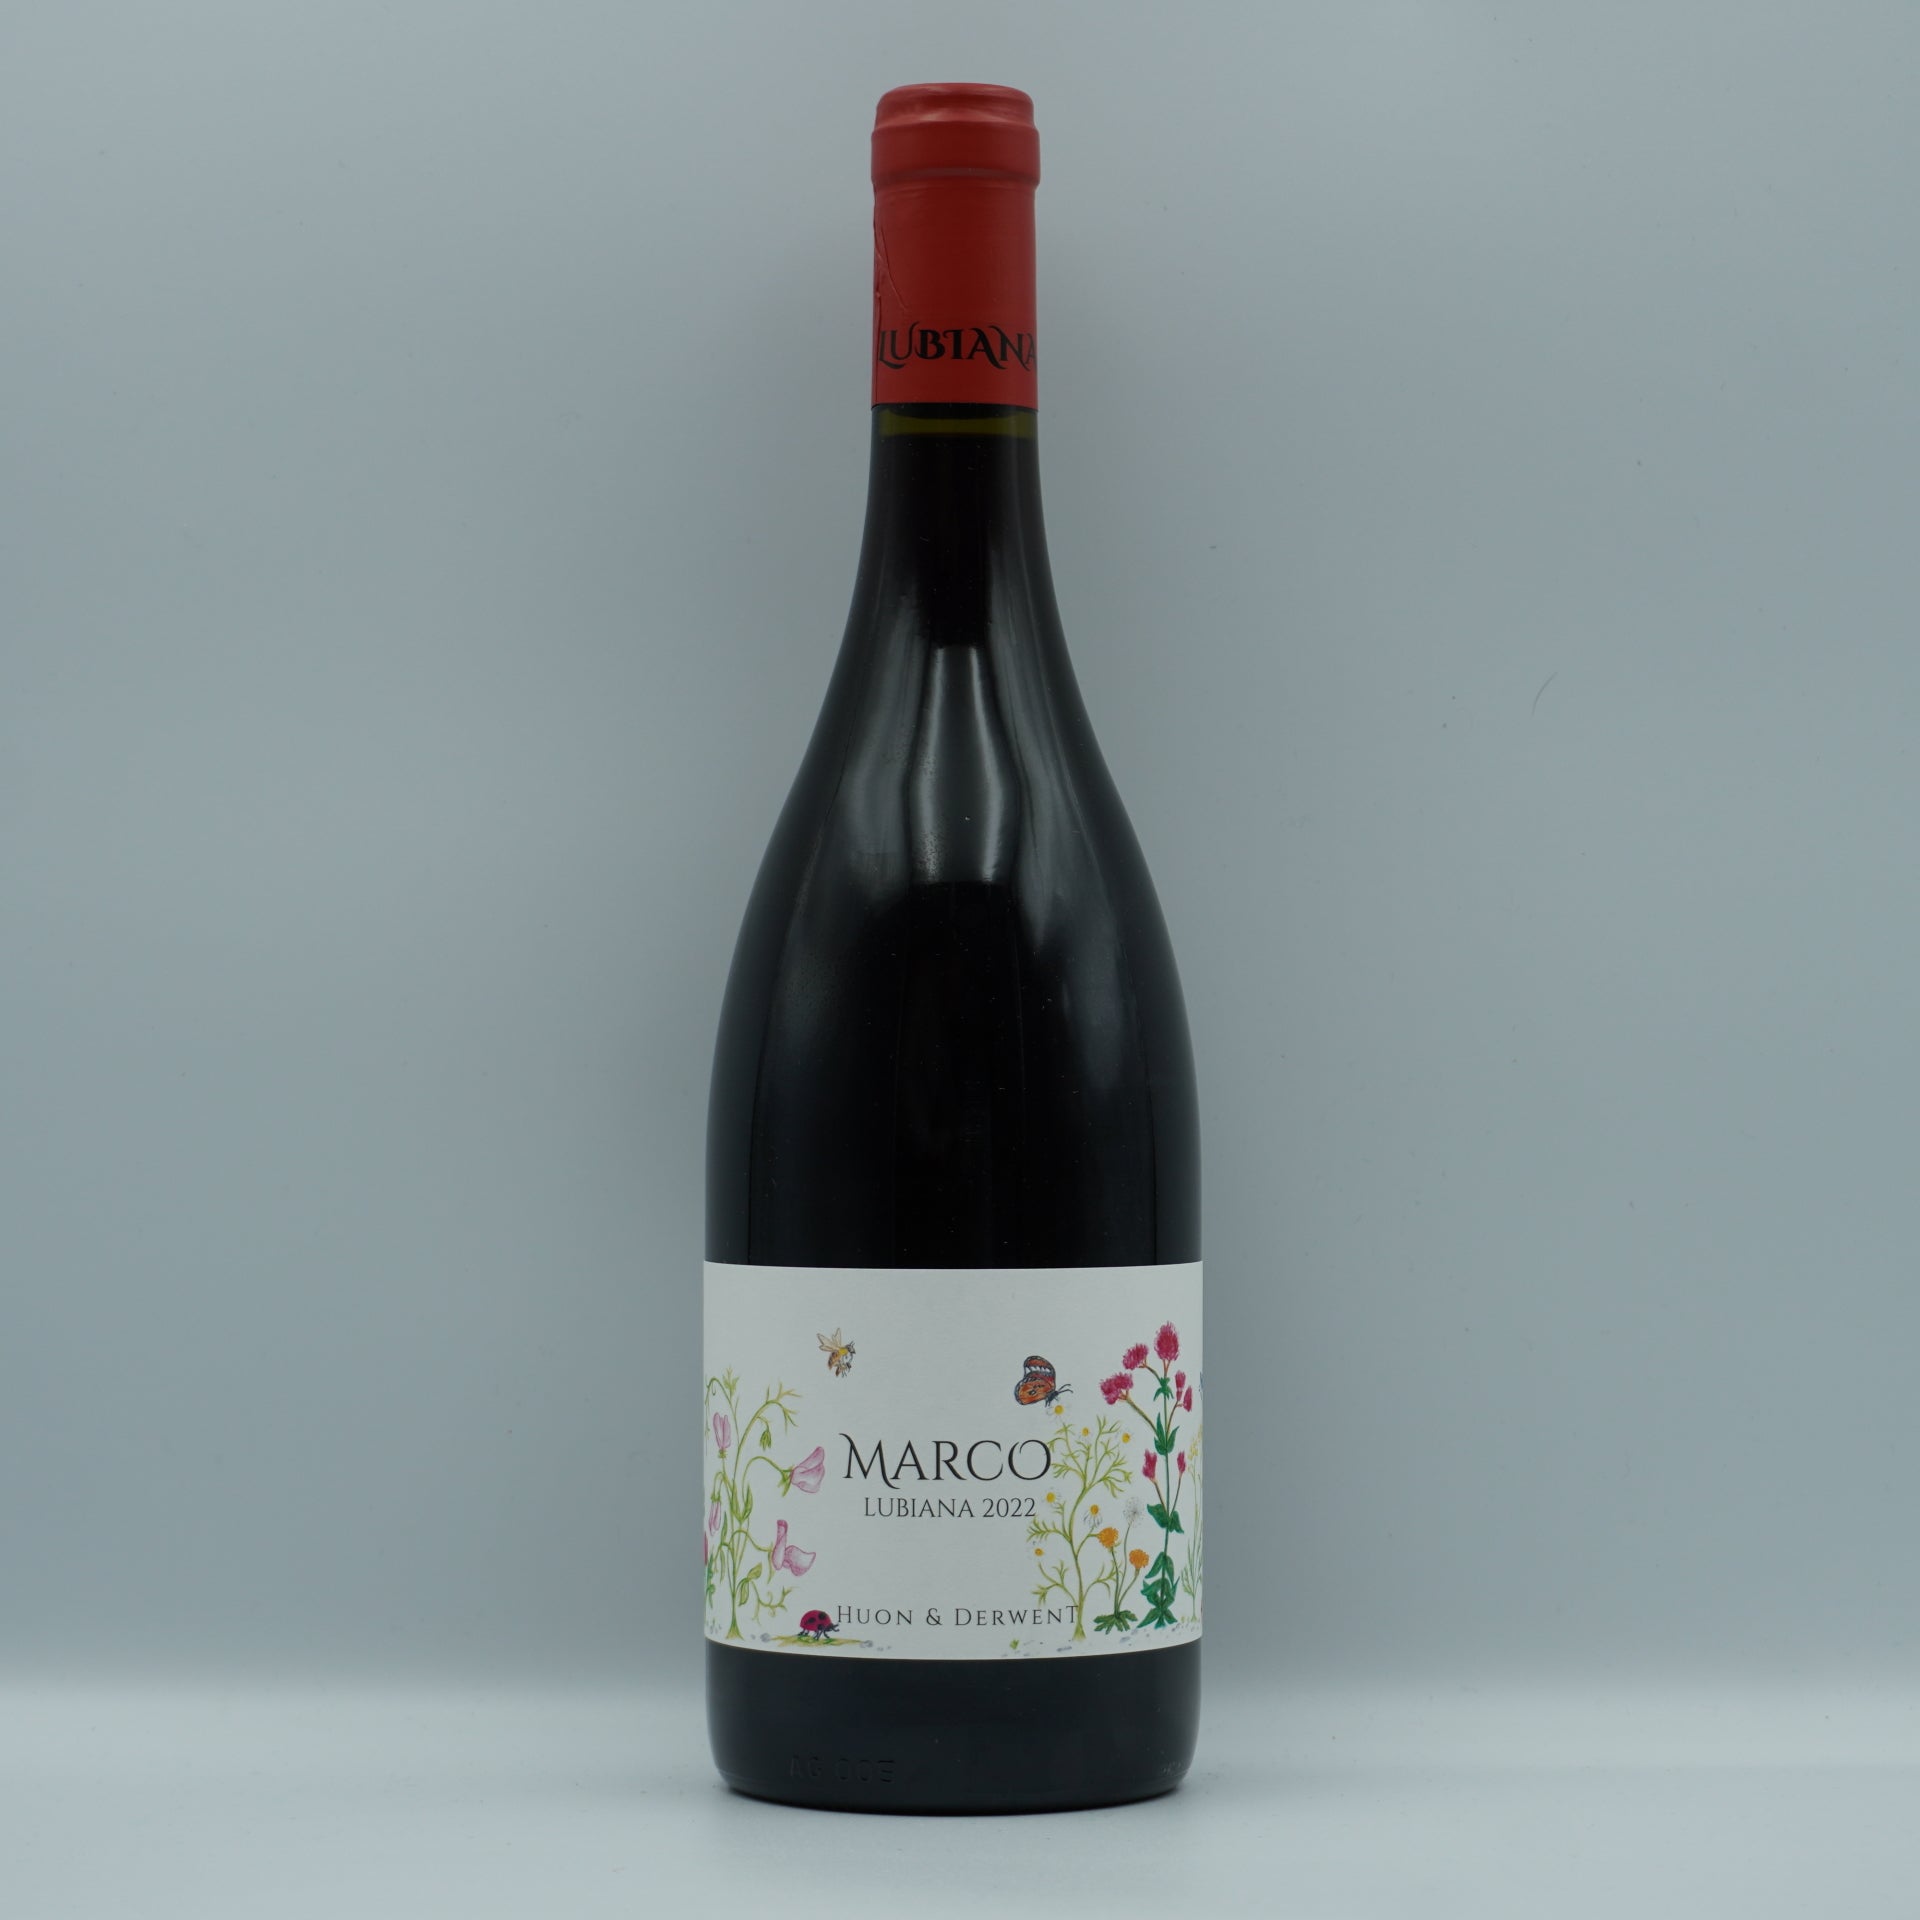 Marco Lubiana, Pinot Noir 2022